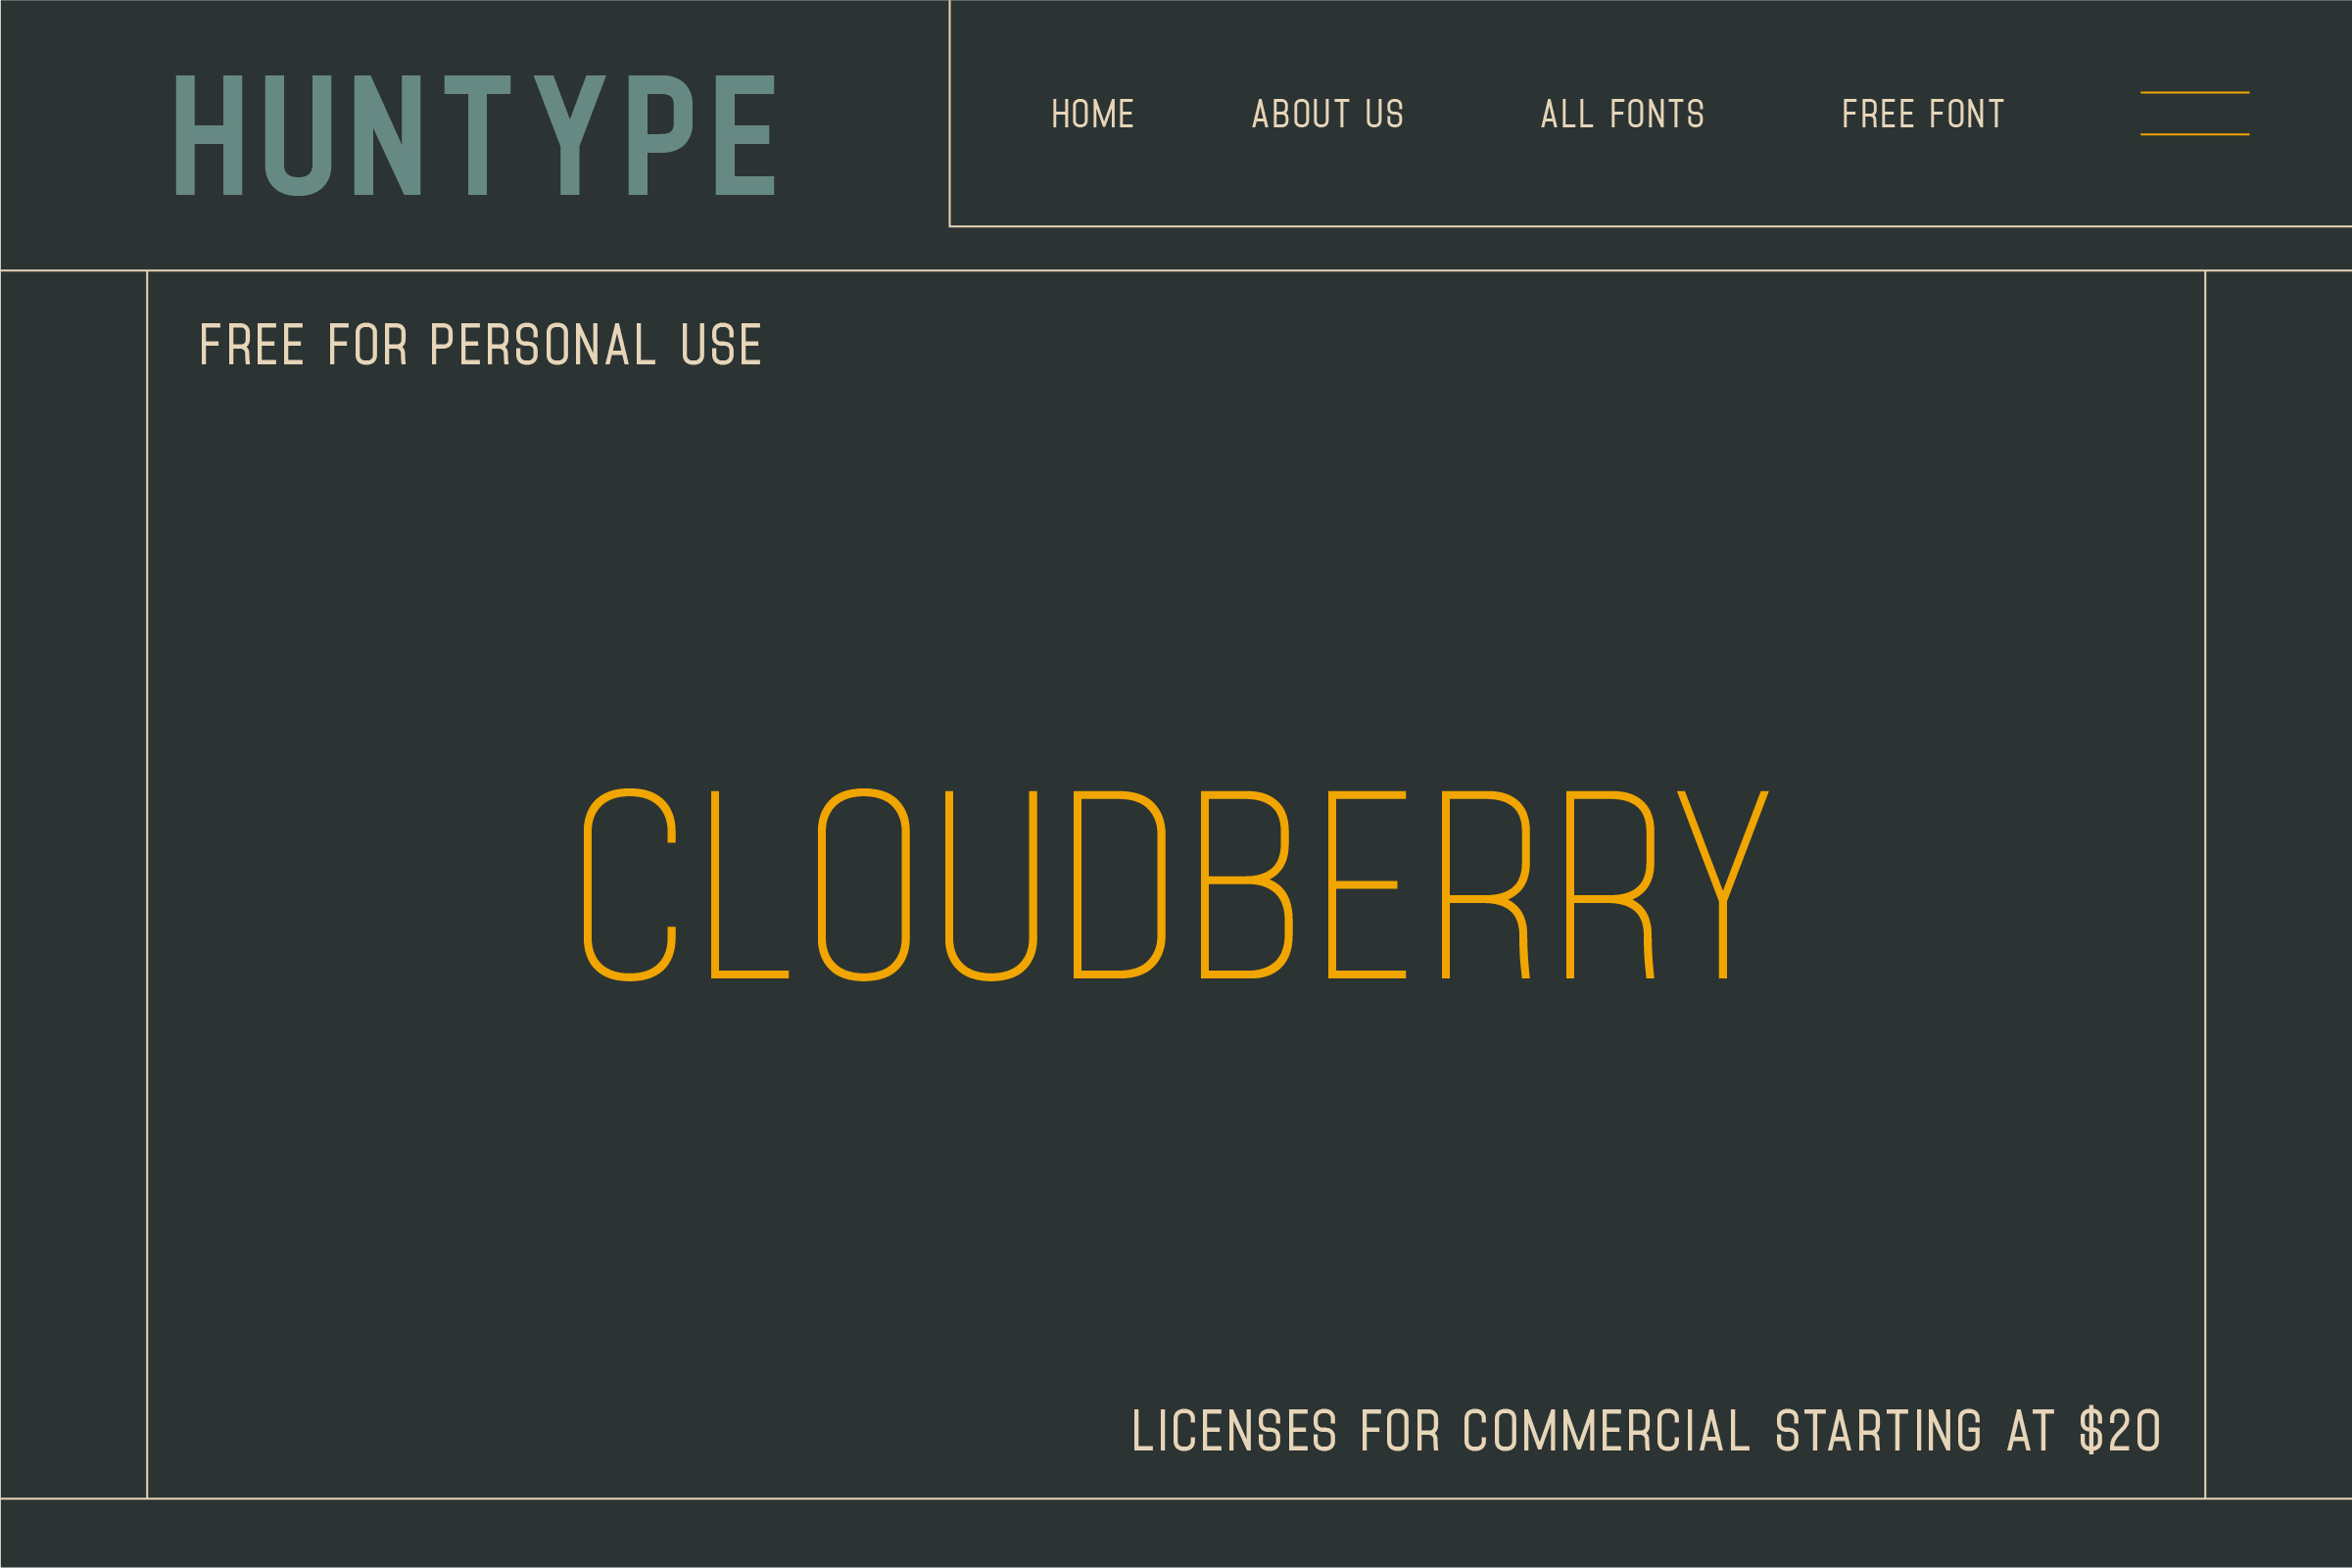 Cloudberry